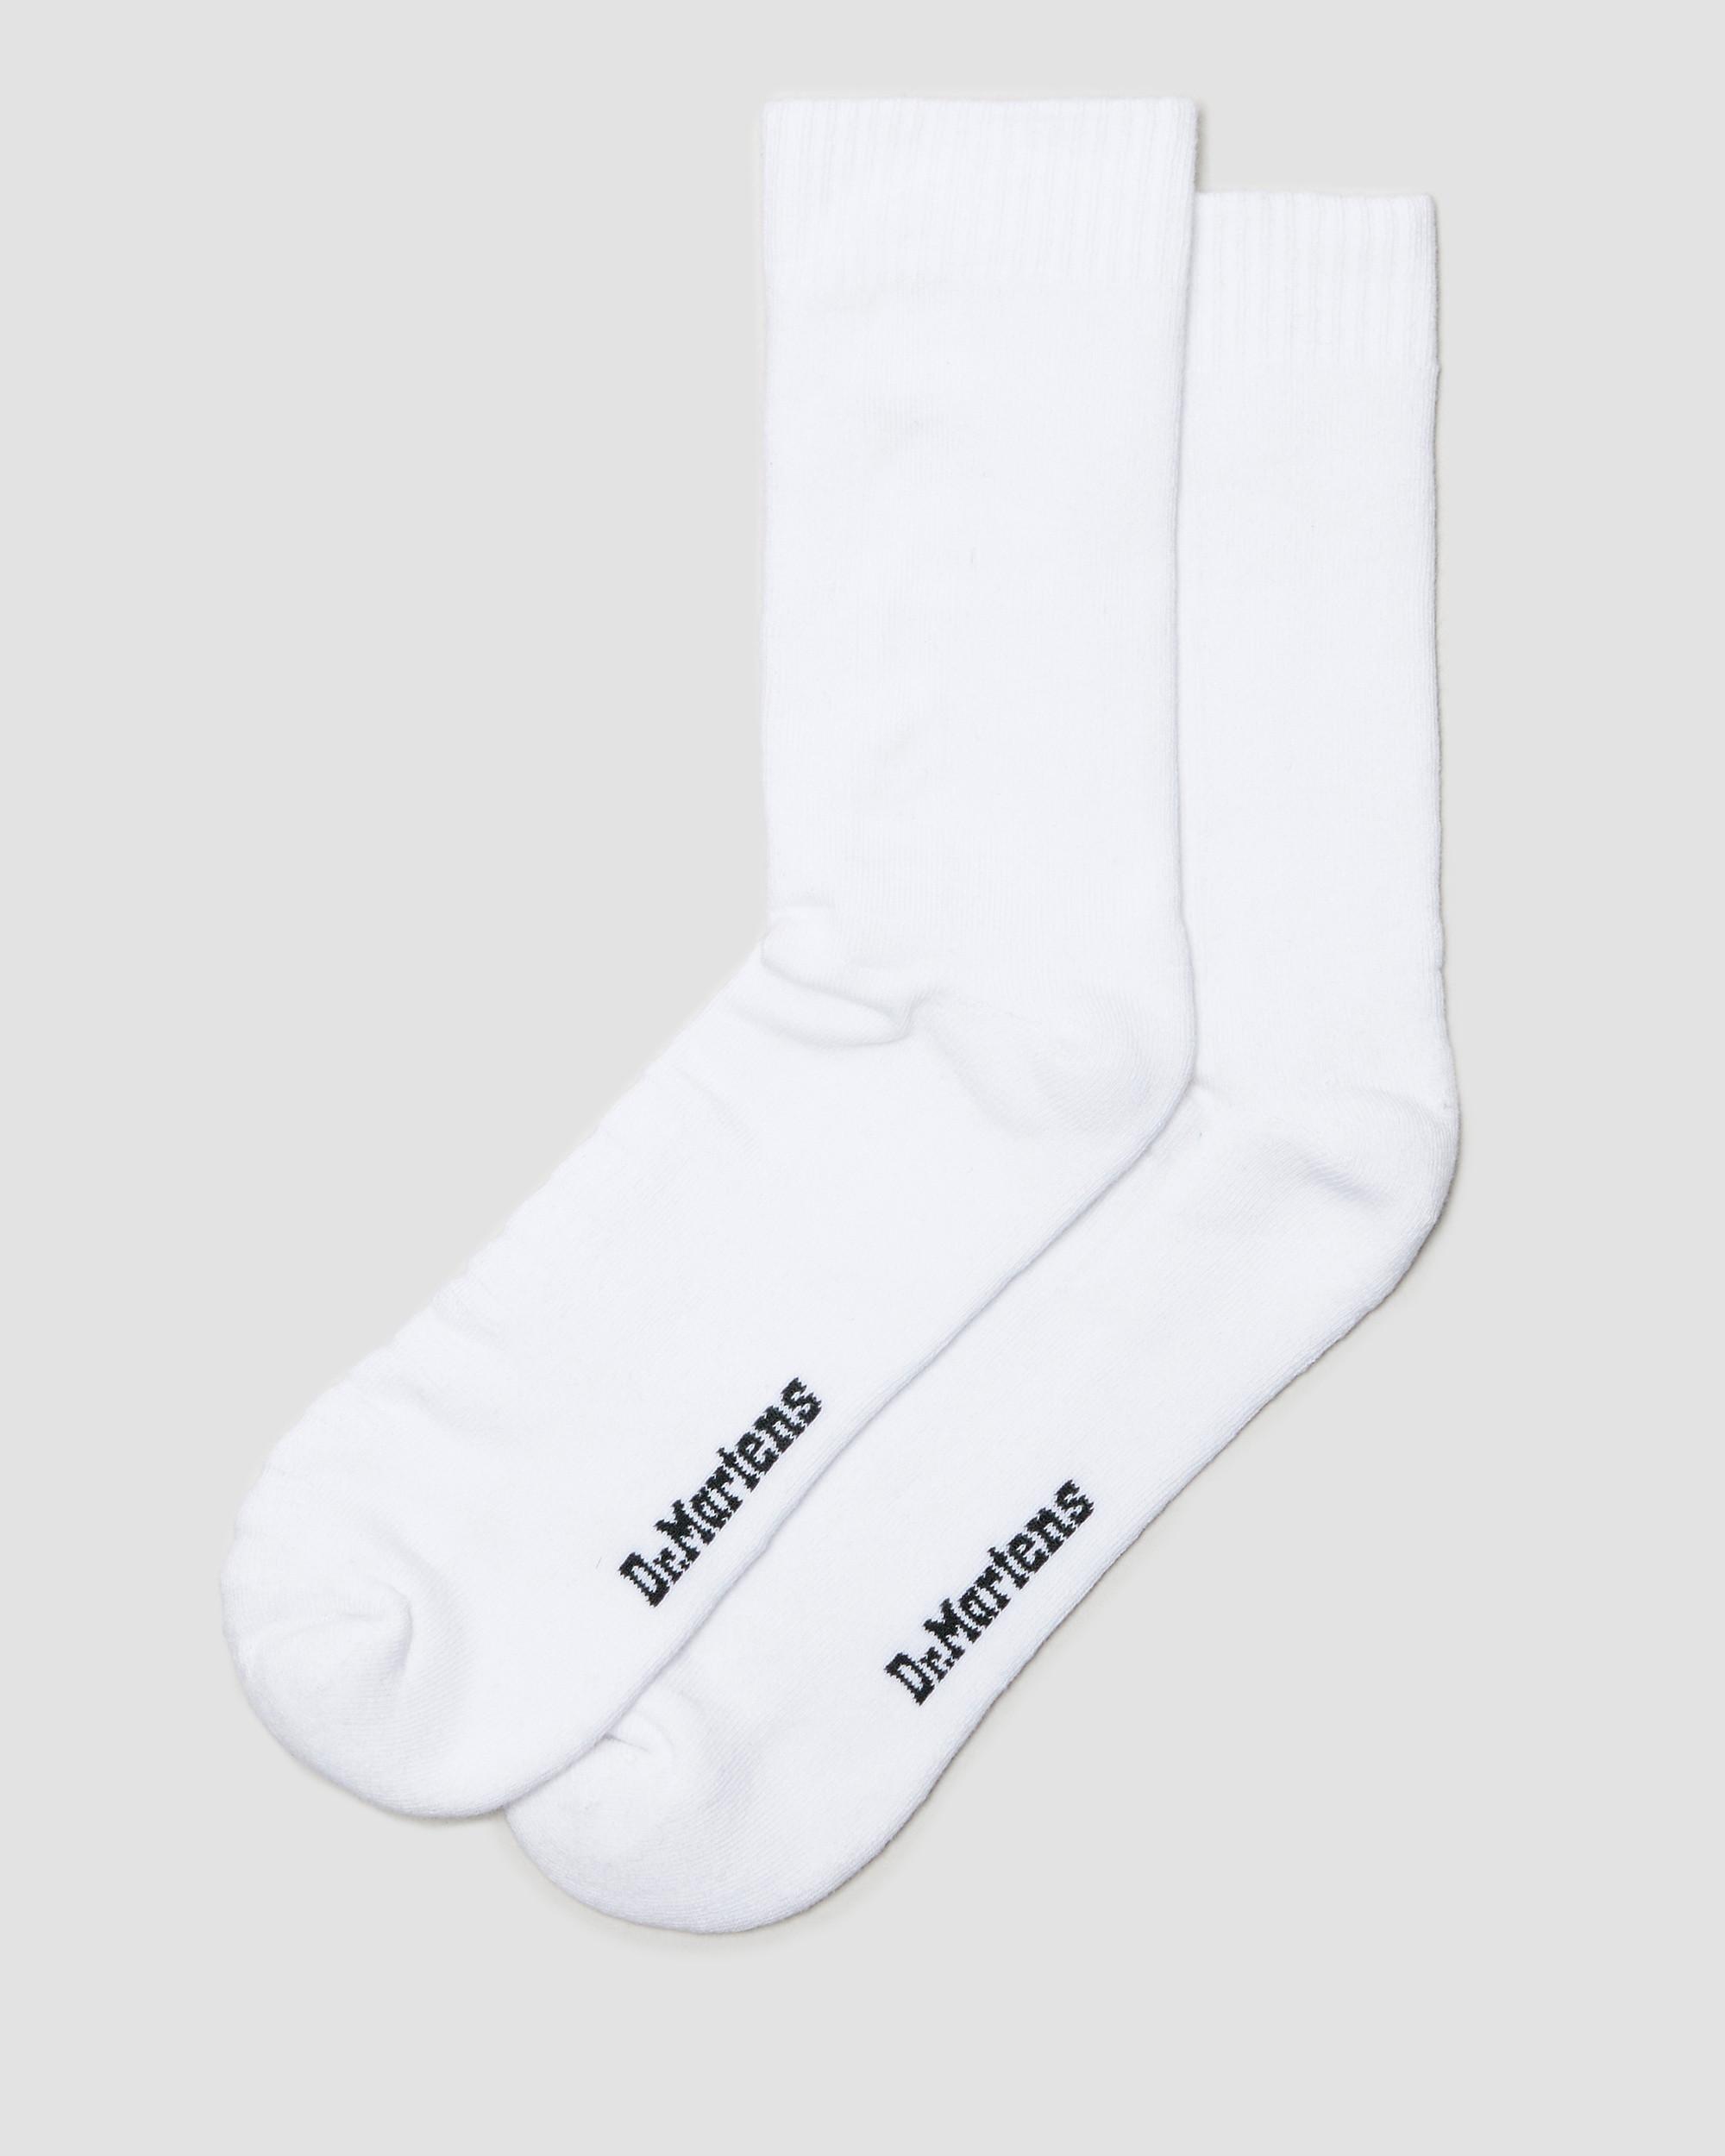 Double Doc Cotton Blend Socks in White | Dr. Martens